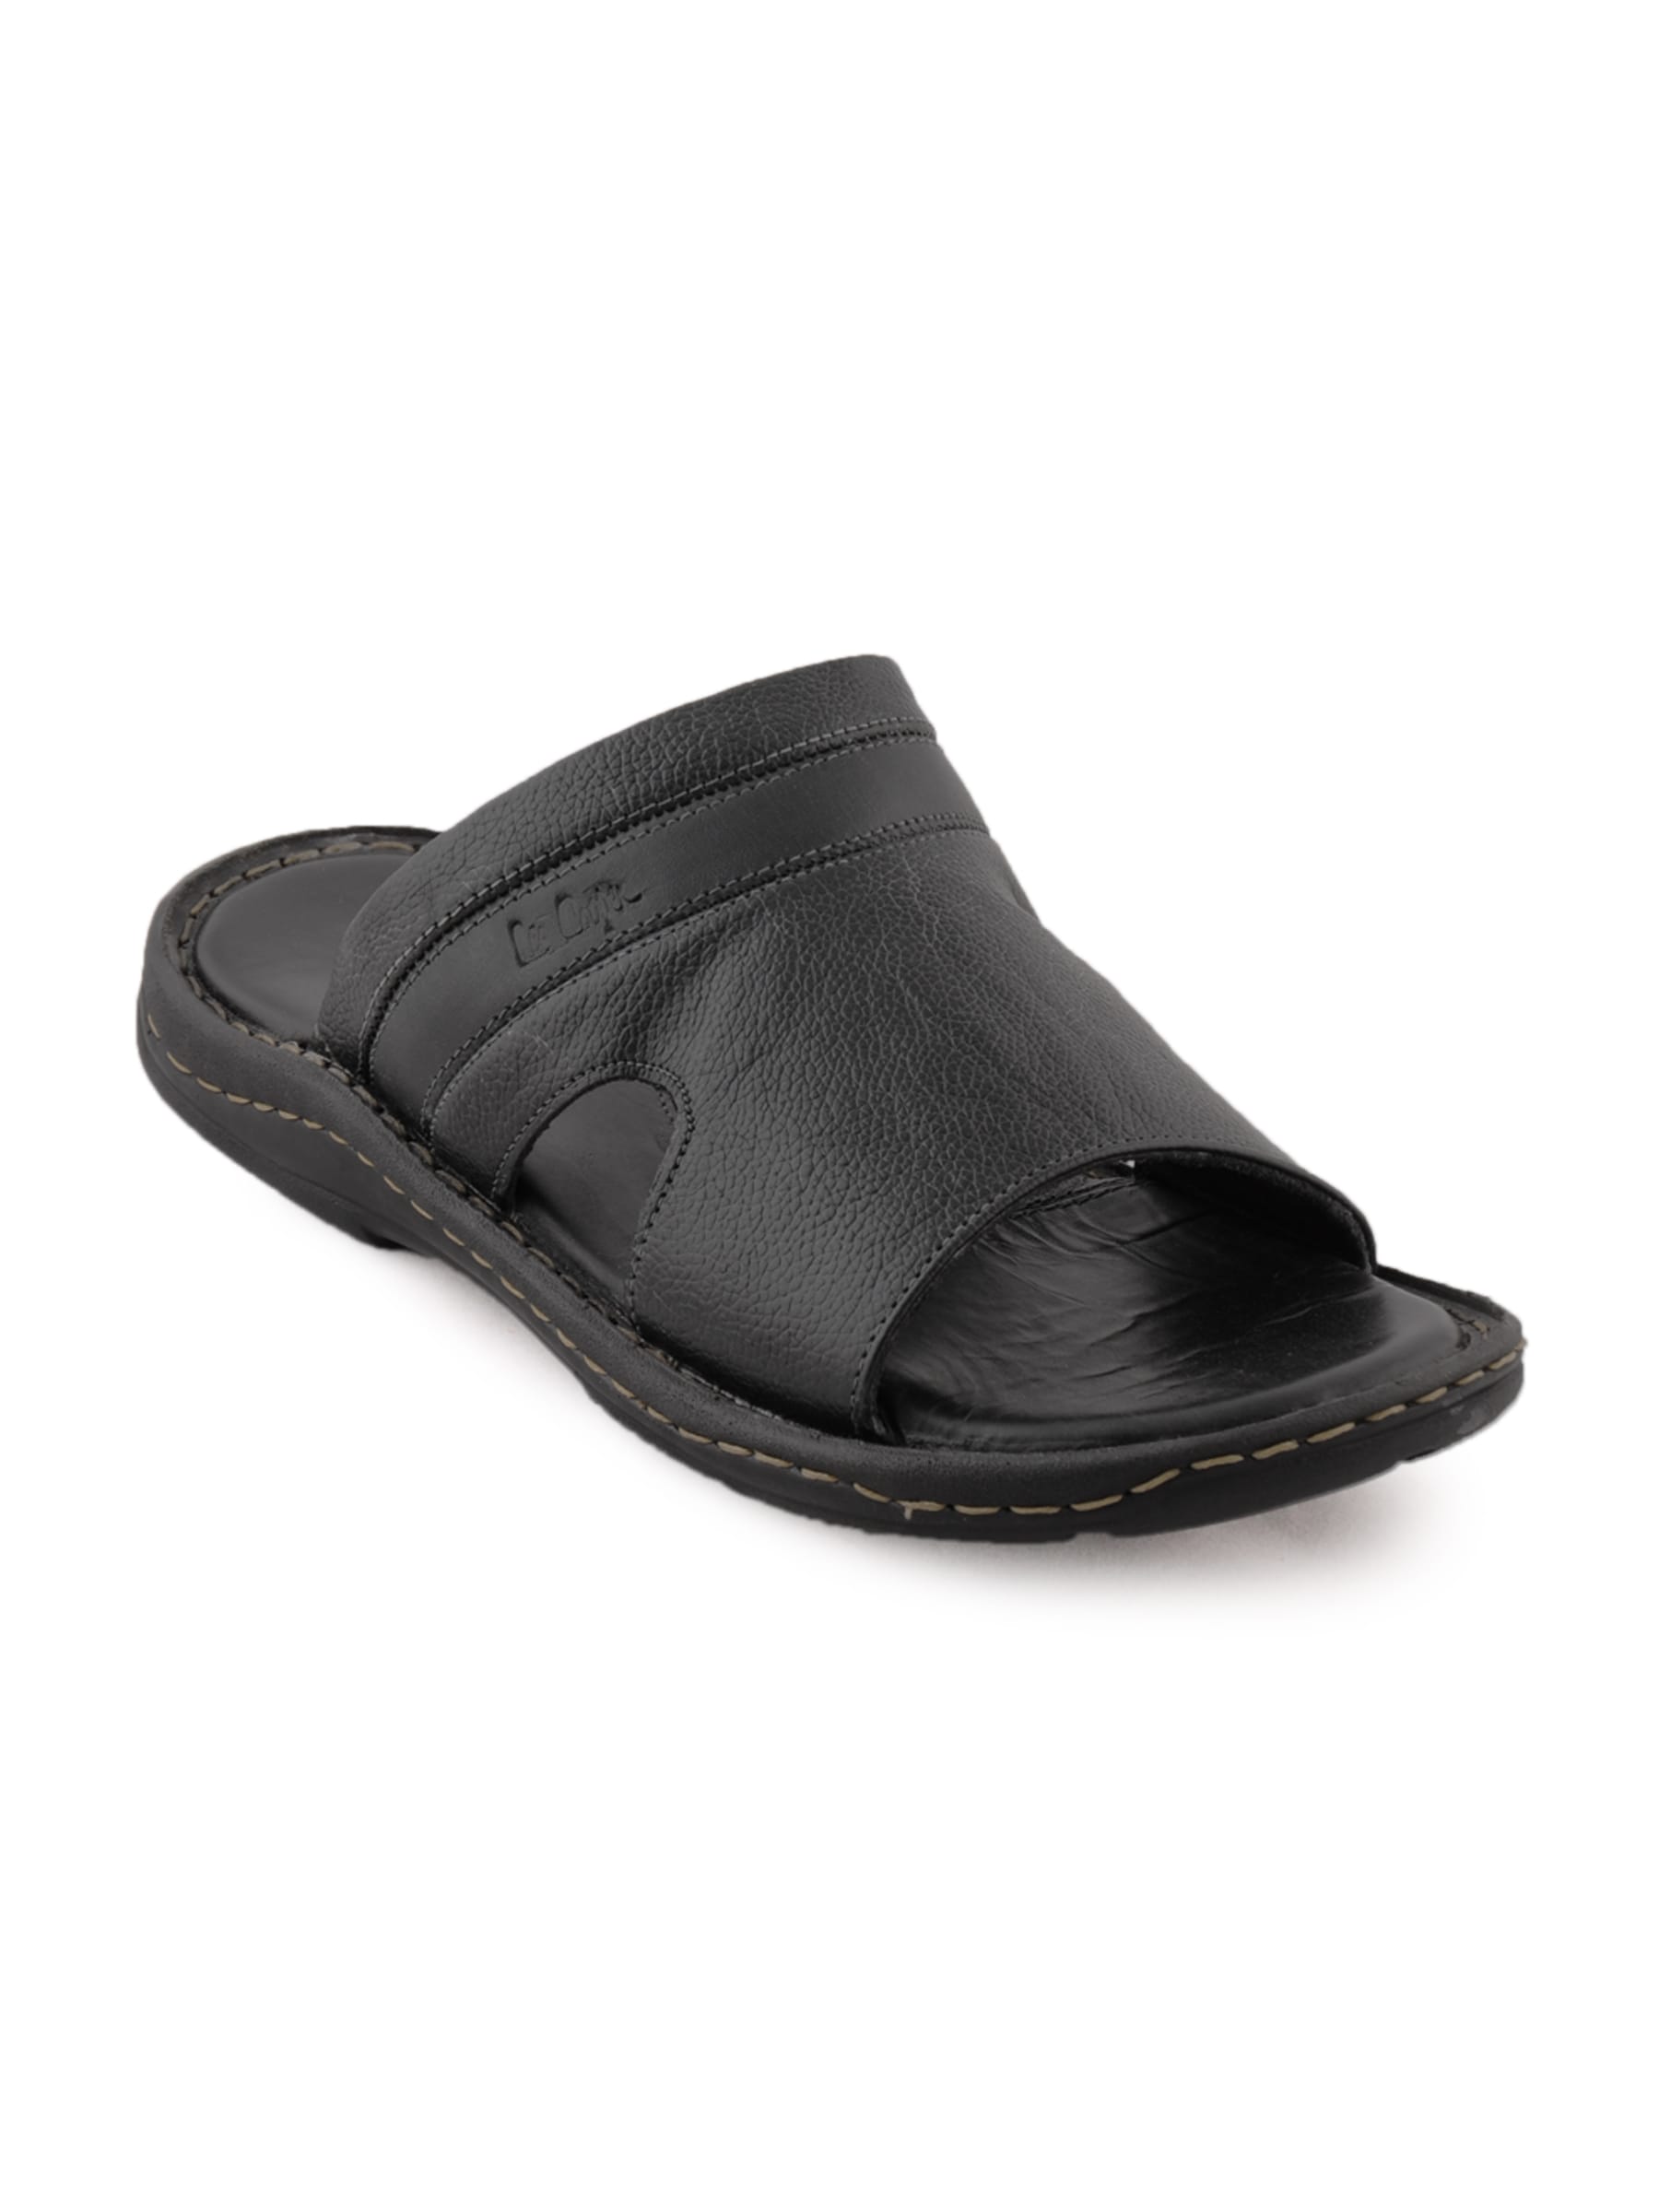 Lee Cooper Men Casual Black Sandals